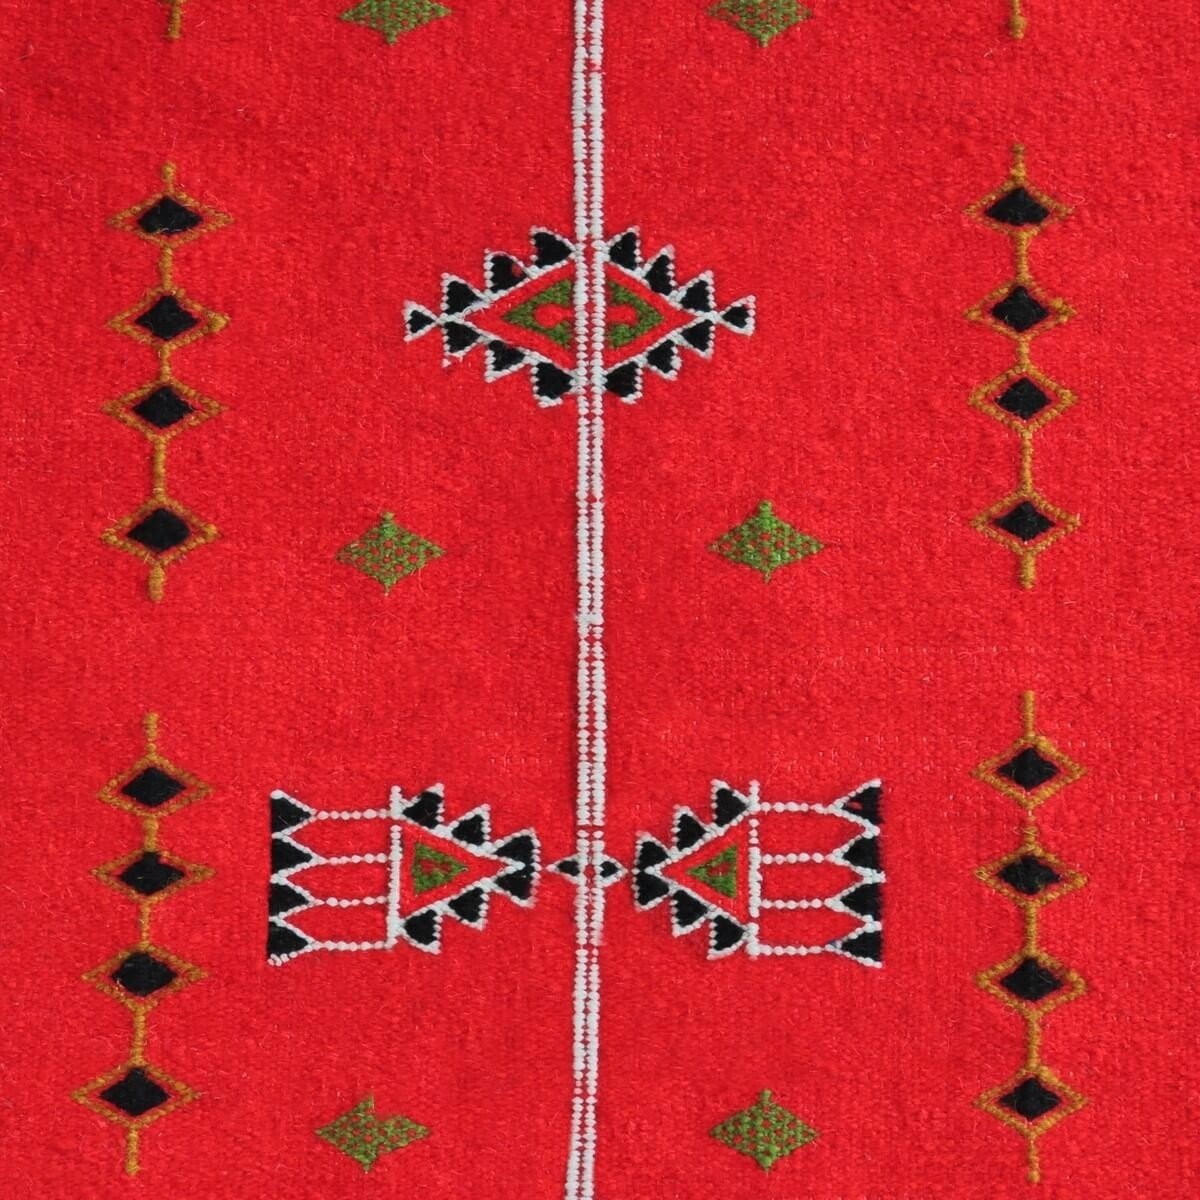 Tapete berbere Tapete Kilim longo Bou Arada 65x220 Vermelho (Tecidos à mão, Lã, Tunísia) Tapete tunisiano kilim, estilo marroqui